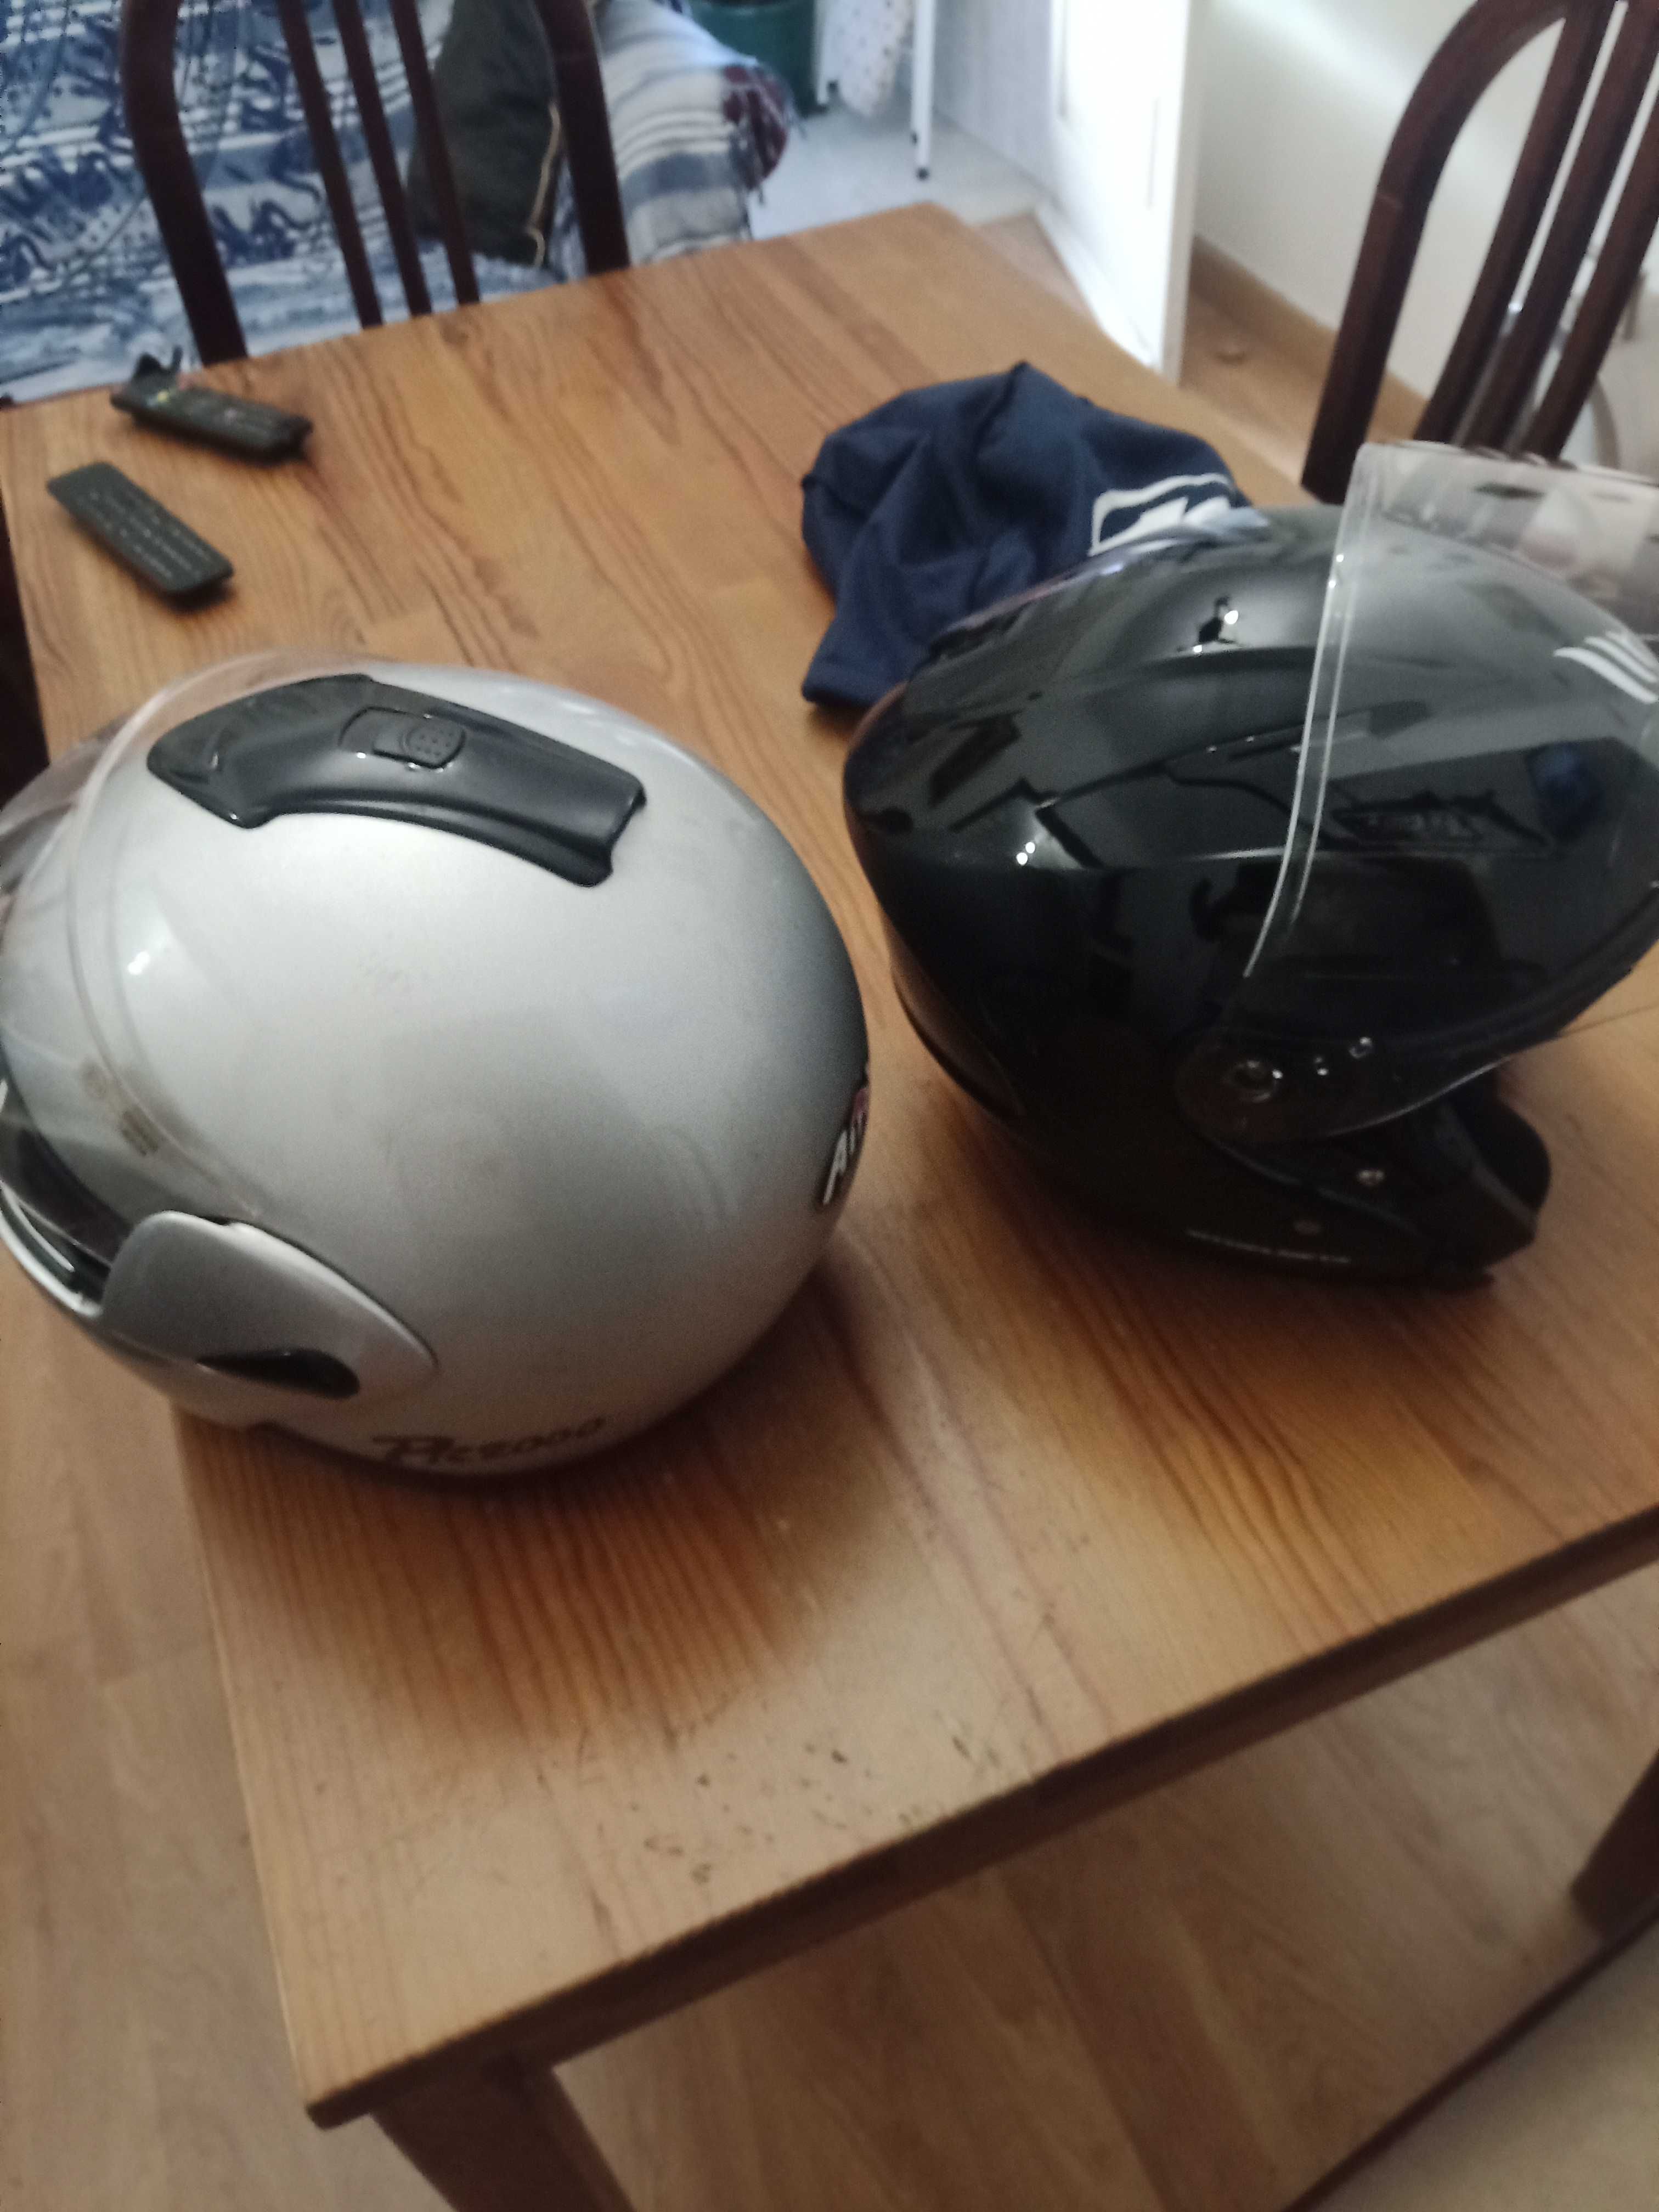 capacetes em bom estado